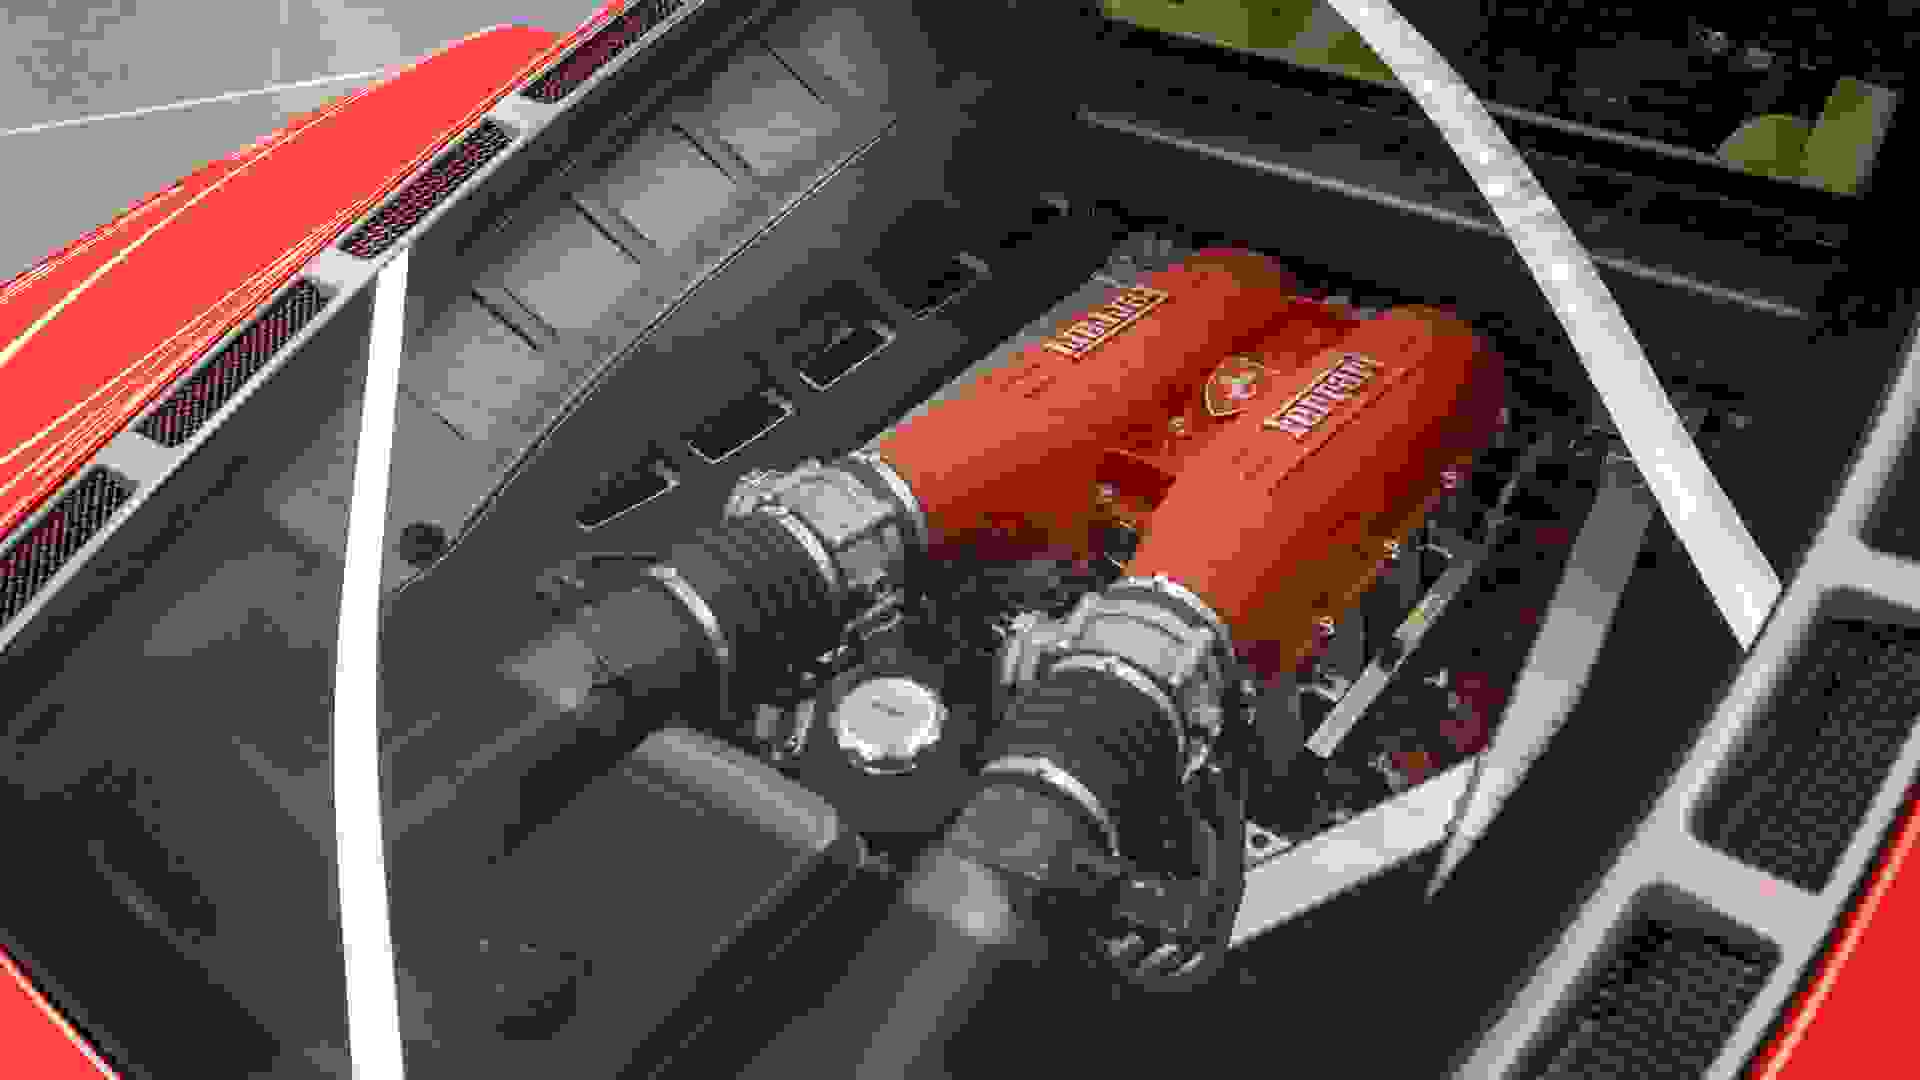 Ferrari F430 Photo 173fc3e2-c1f1-4c29-9c06-1c64d8154db5.jpg